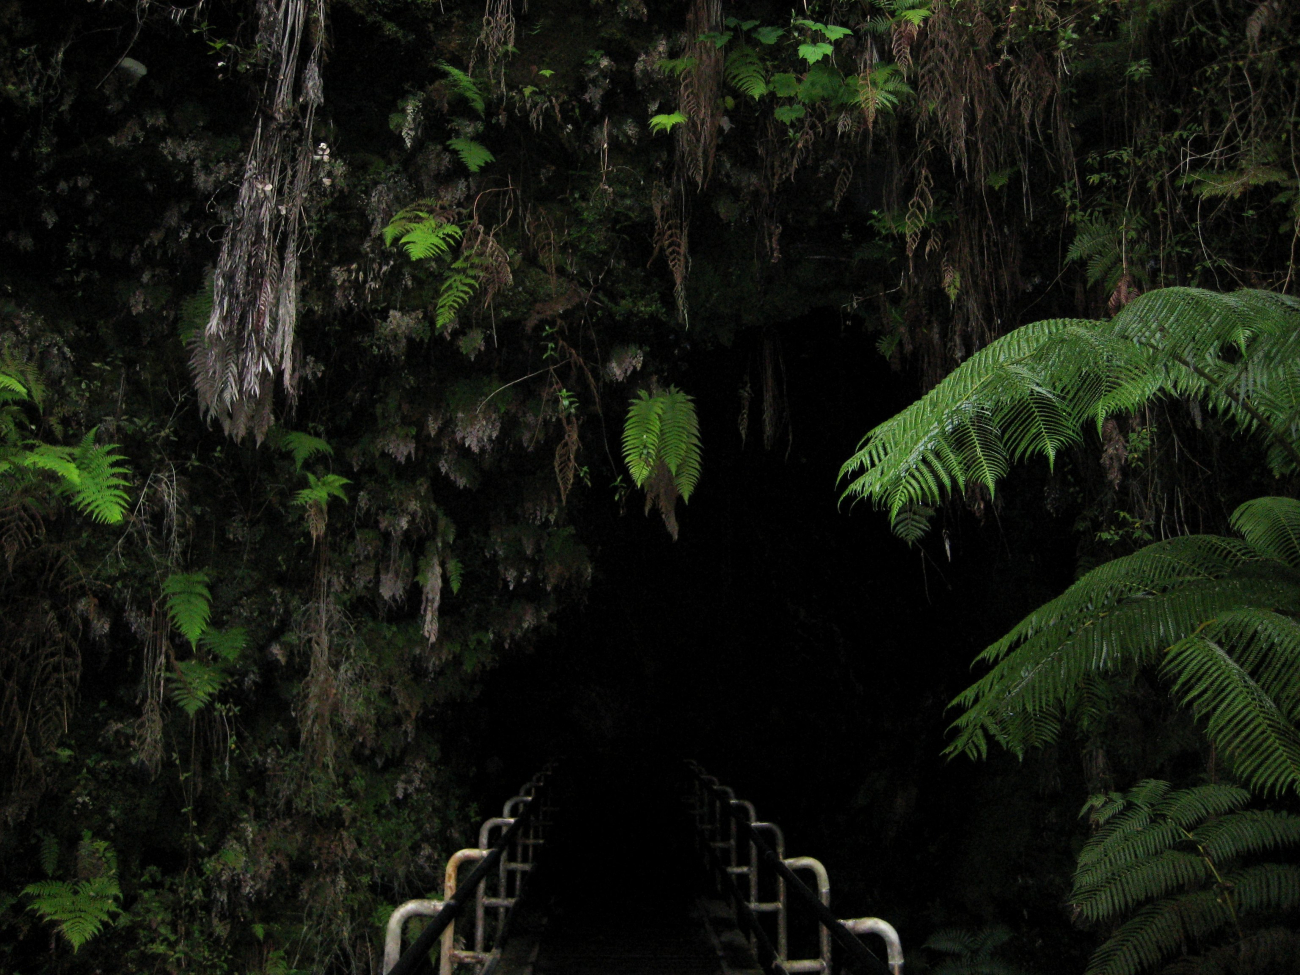 The entrance to Thurston Lava tube